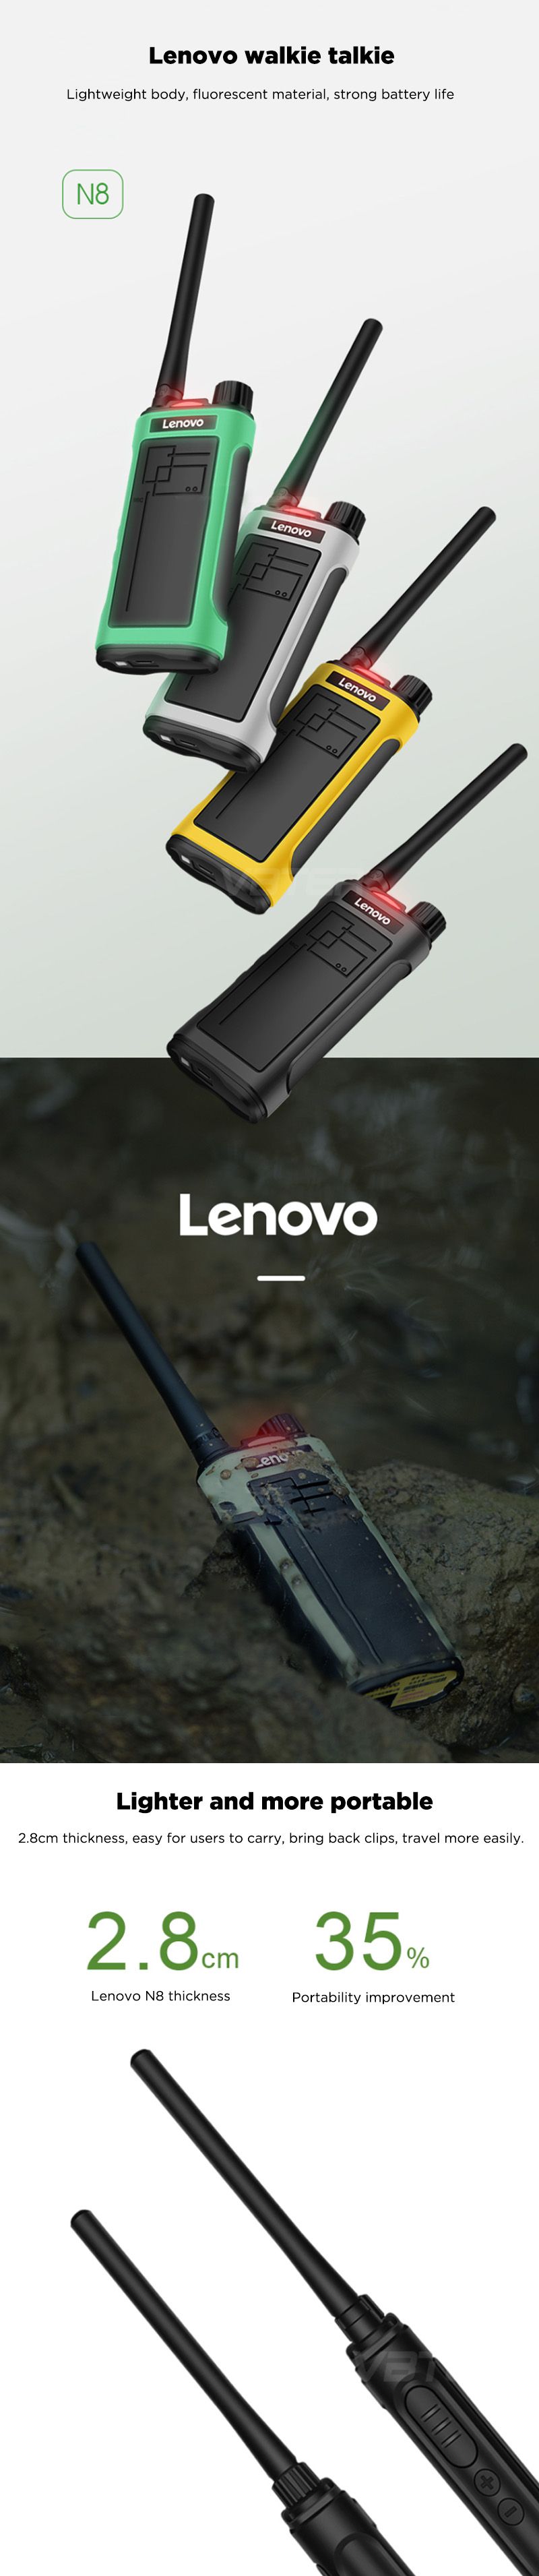 Lenovo-N8-5W-430-440MHz-Mini-Ultra-Thin-Handhelad-Radio-Walkie-Talkie-USB-Charging-Driving-Hotel-Civ-1587722